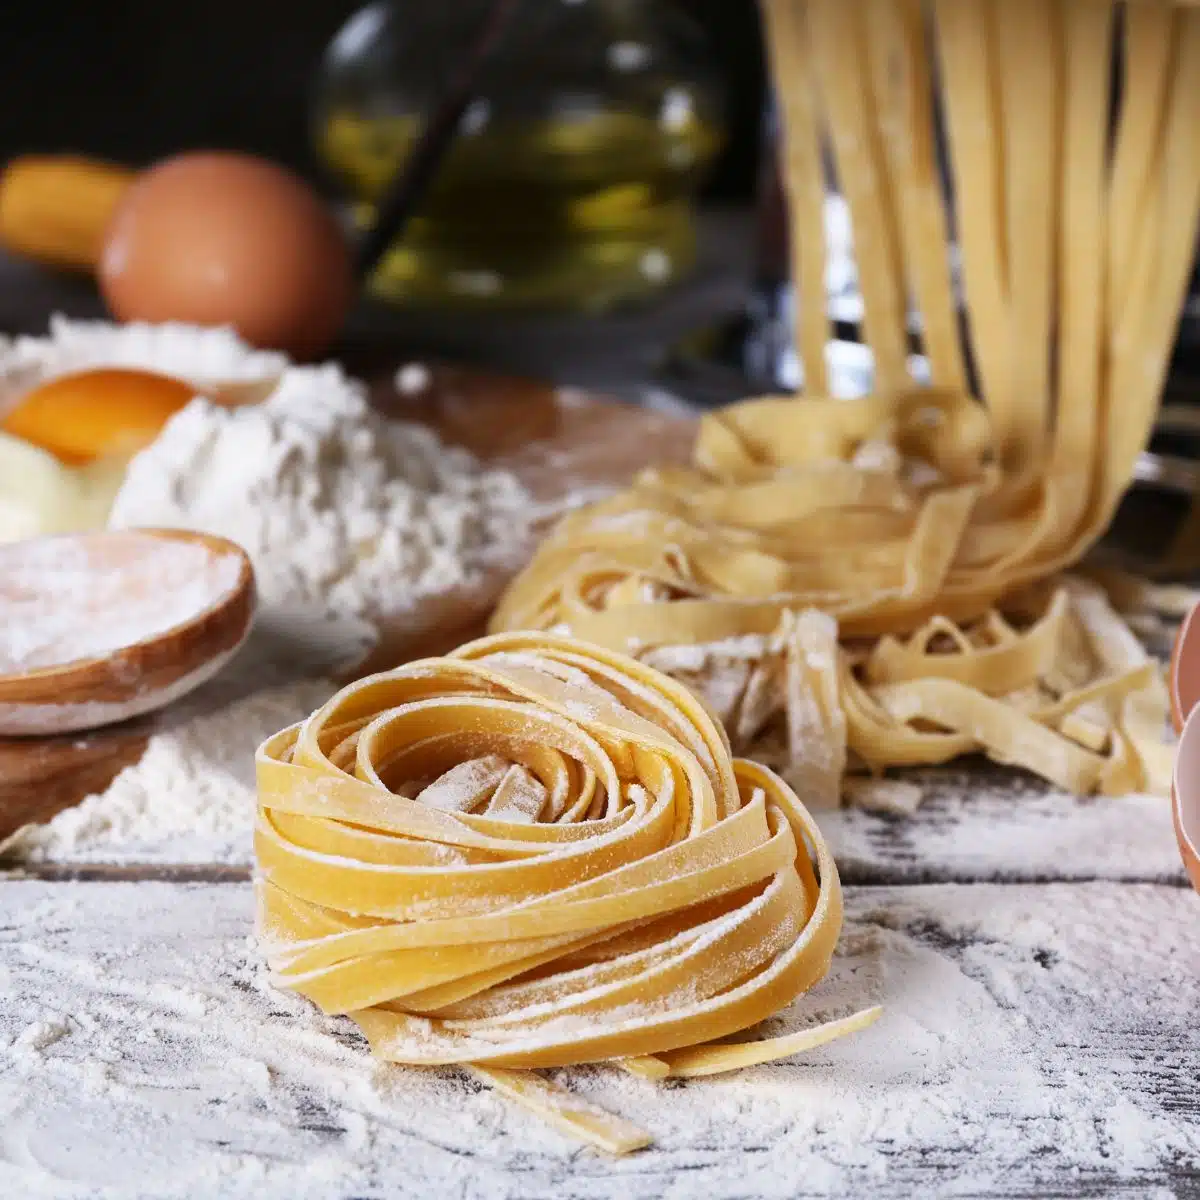 Gambar persegi pasta buatan sendiri dengan persediaan pembuatan pasta.